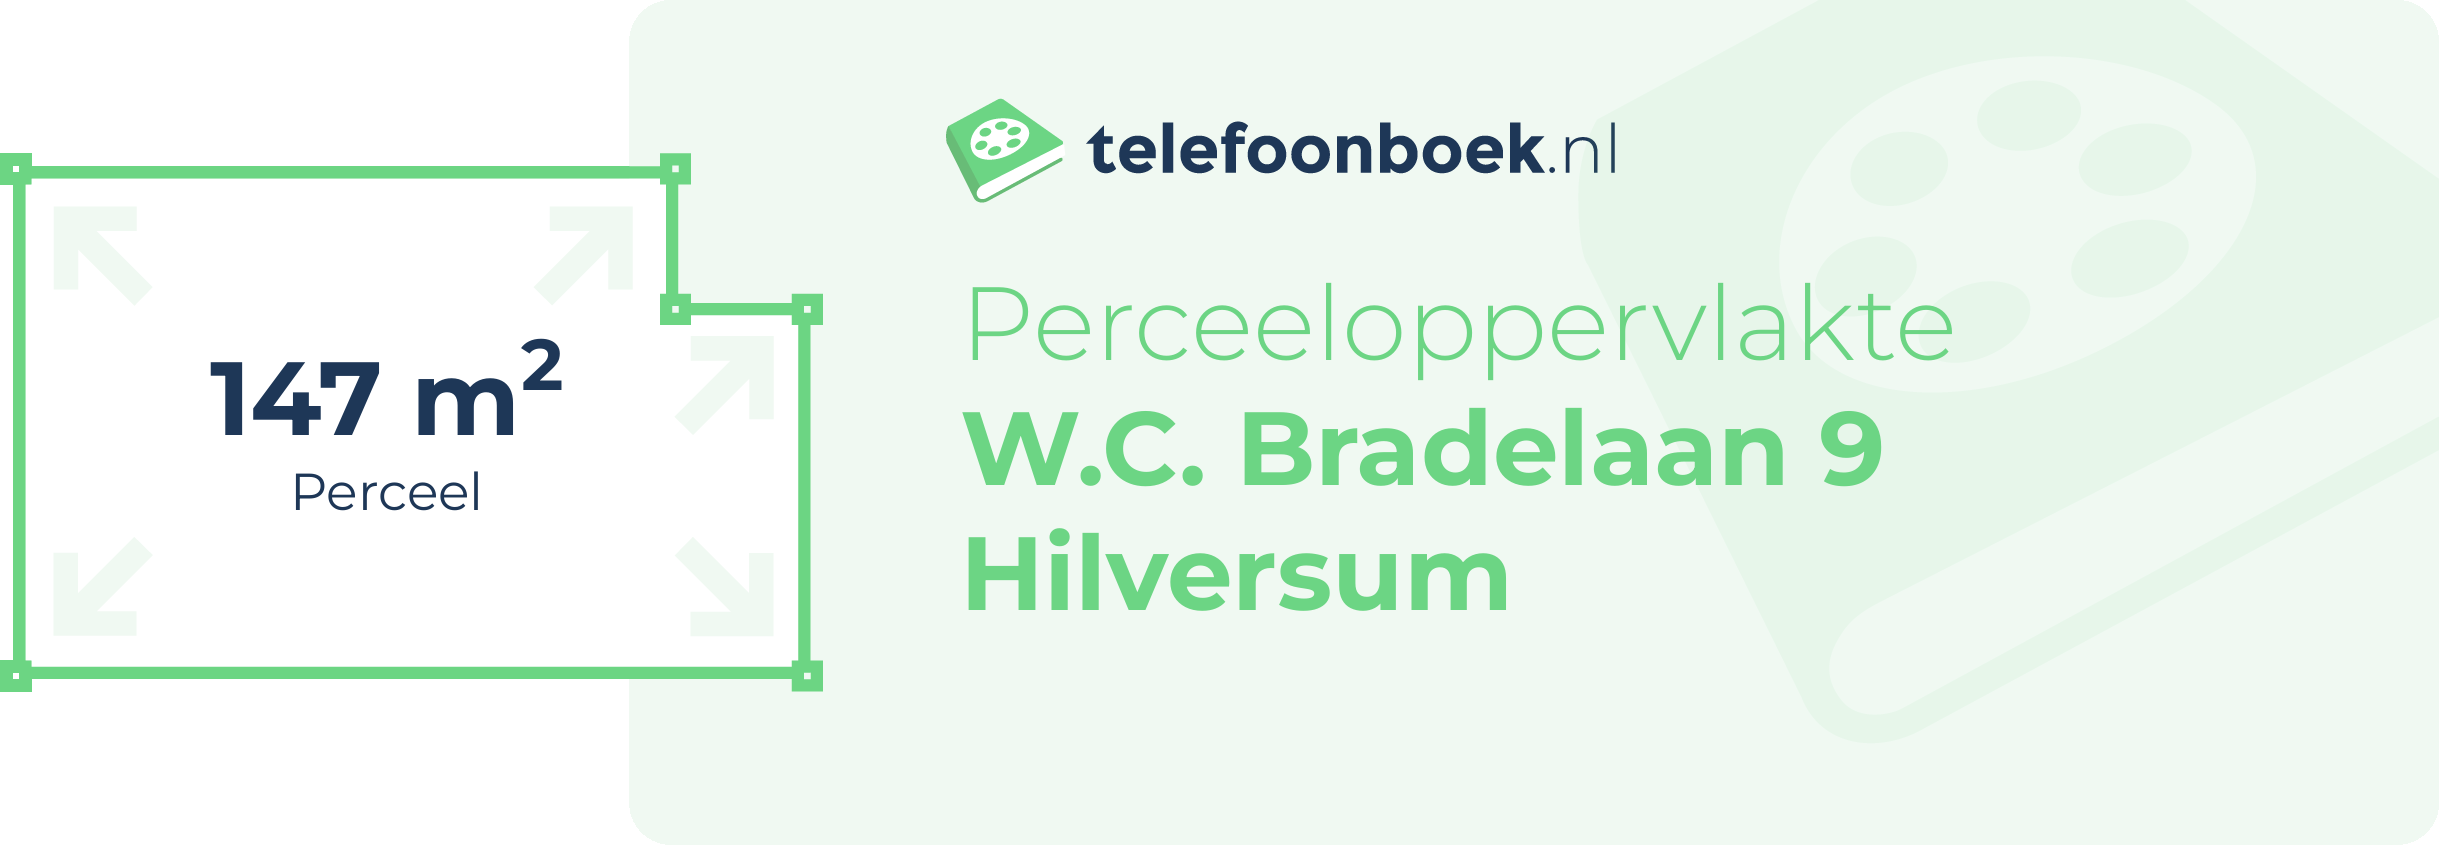 Perceeloppervlakte W.C. Bradelaan 9 Hilversum